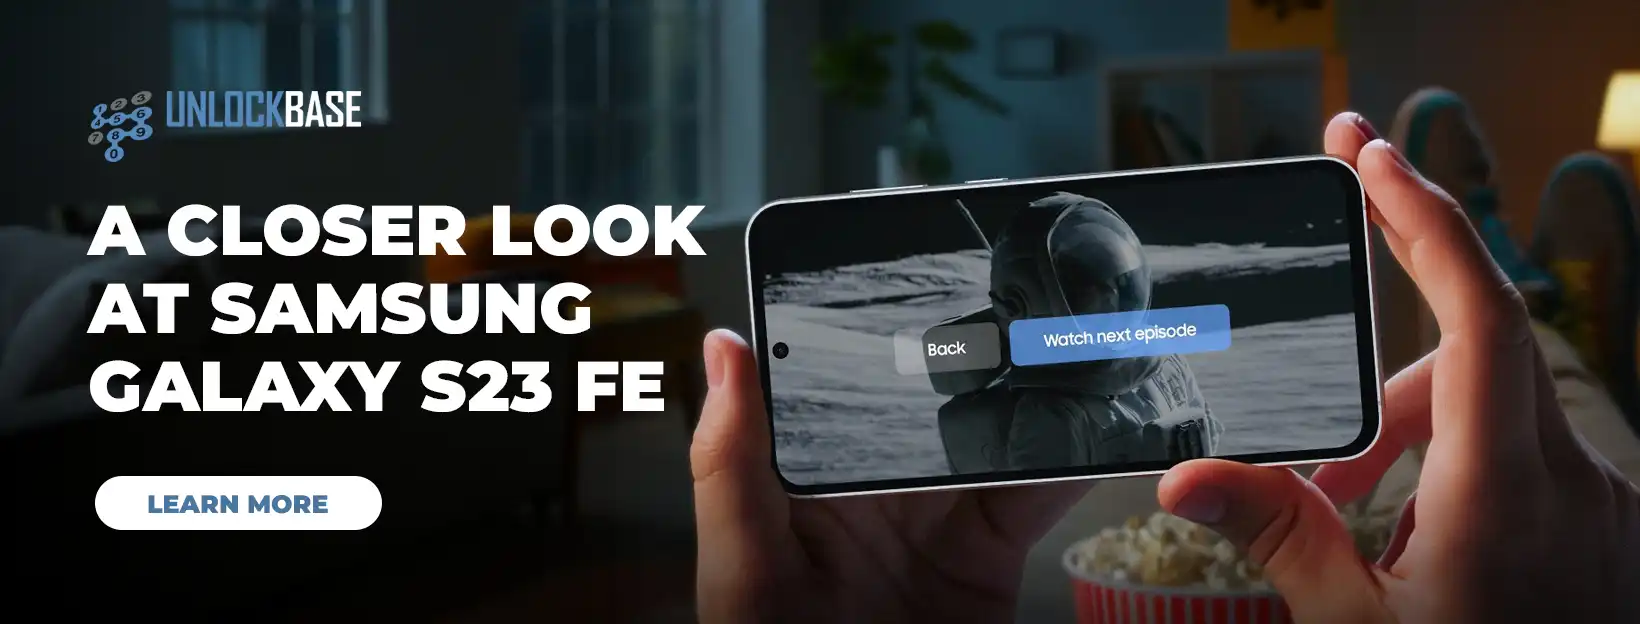 Samsung Galaxy S23 FE: Exynos 2200, 6.4-inch Display, and